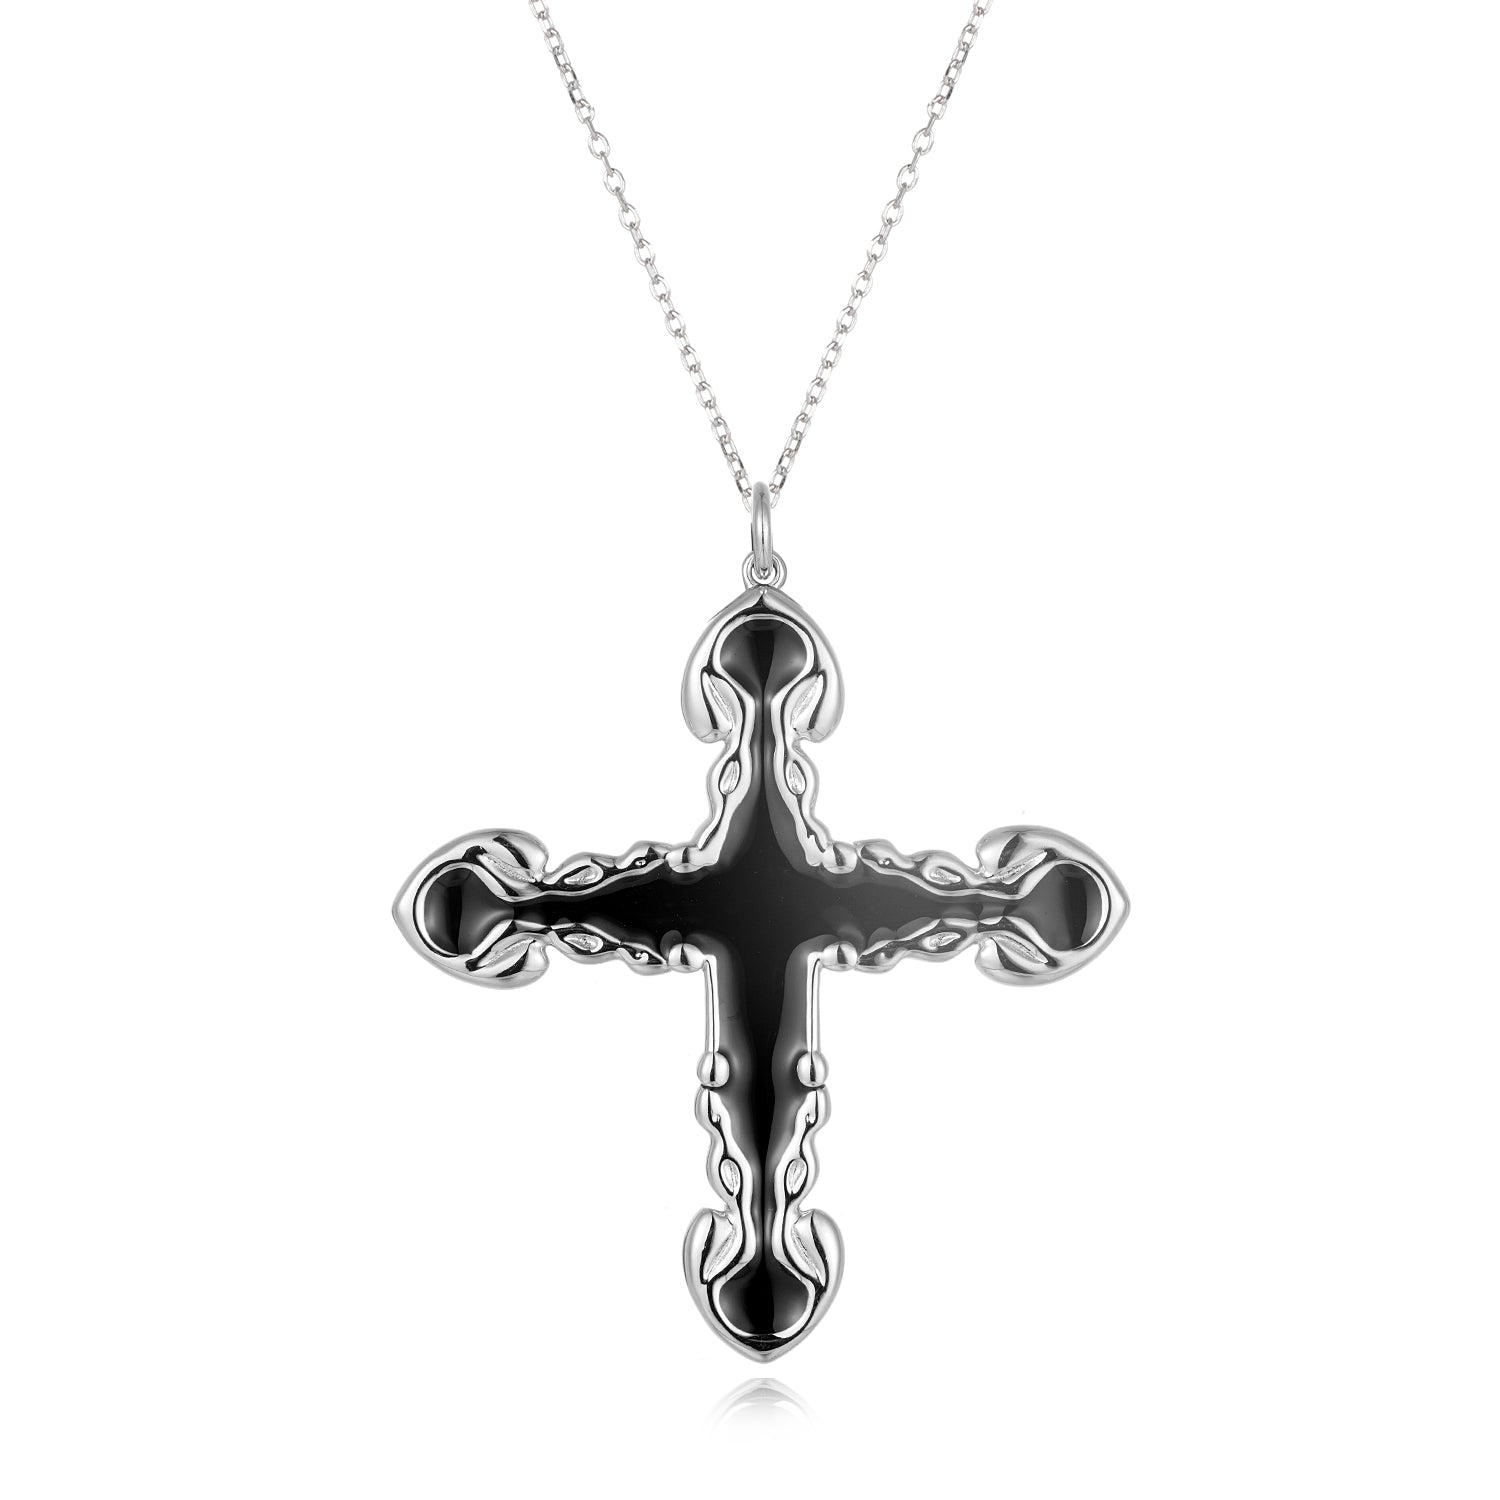 Black Cross Chain Necklace